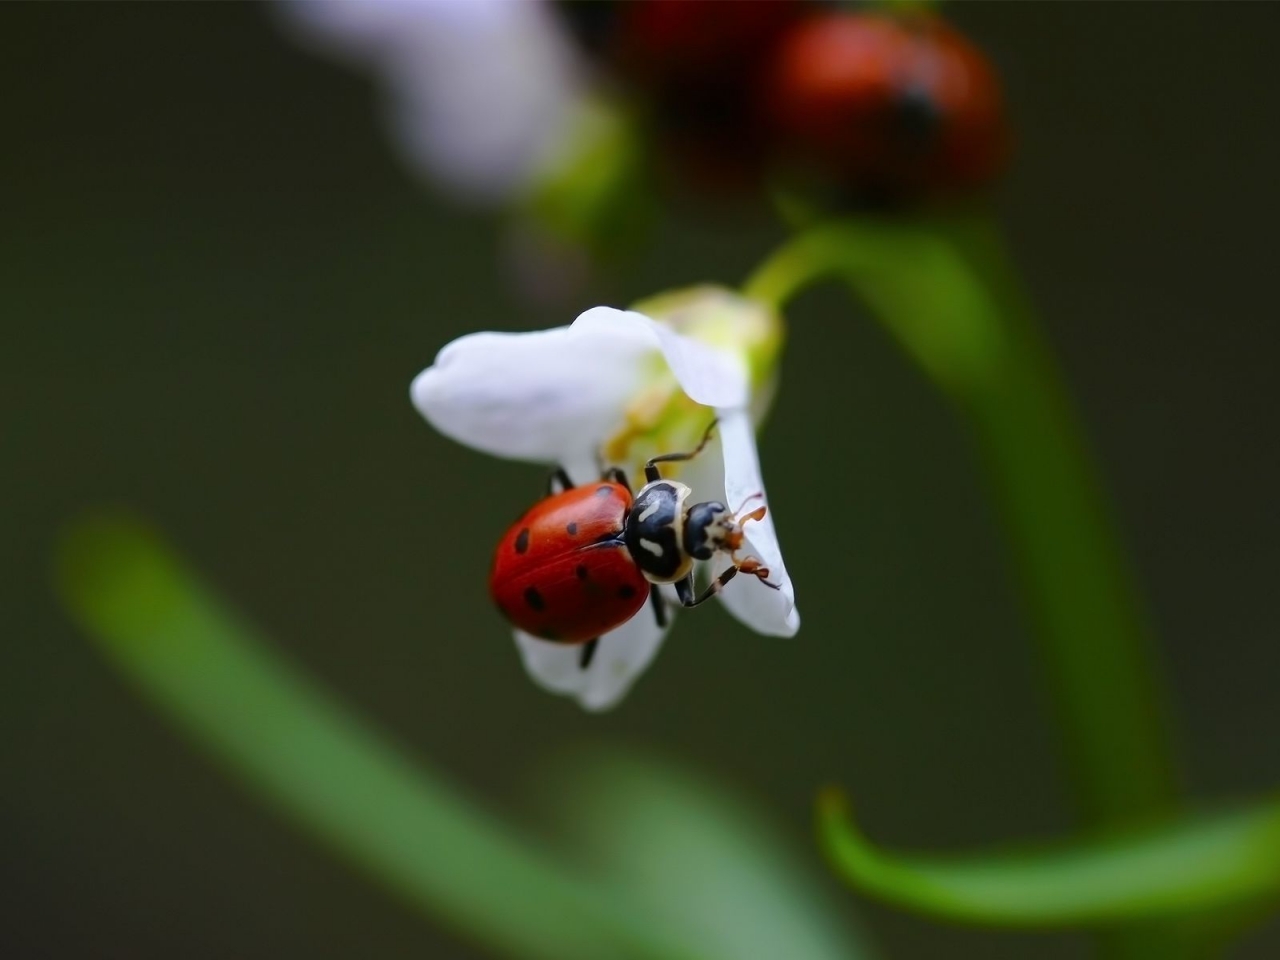 Ladybug on White Flower for 1280 x 960 resolution